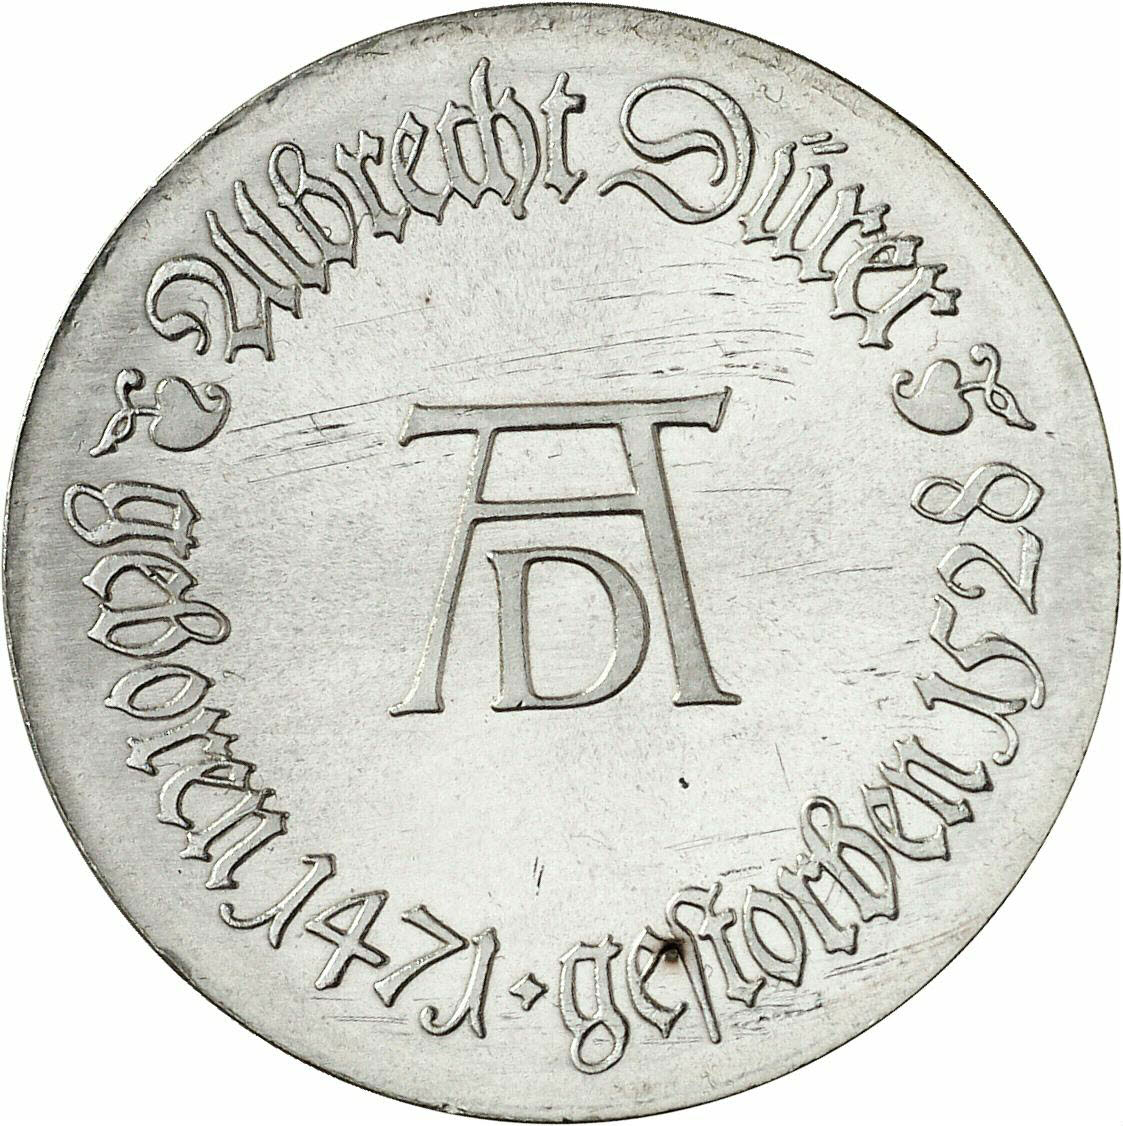 DE 10 Mark der DDR 1971